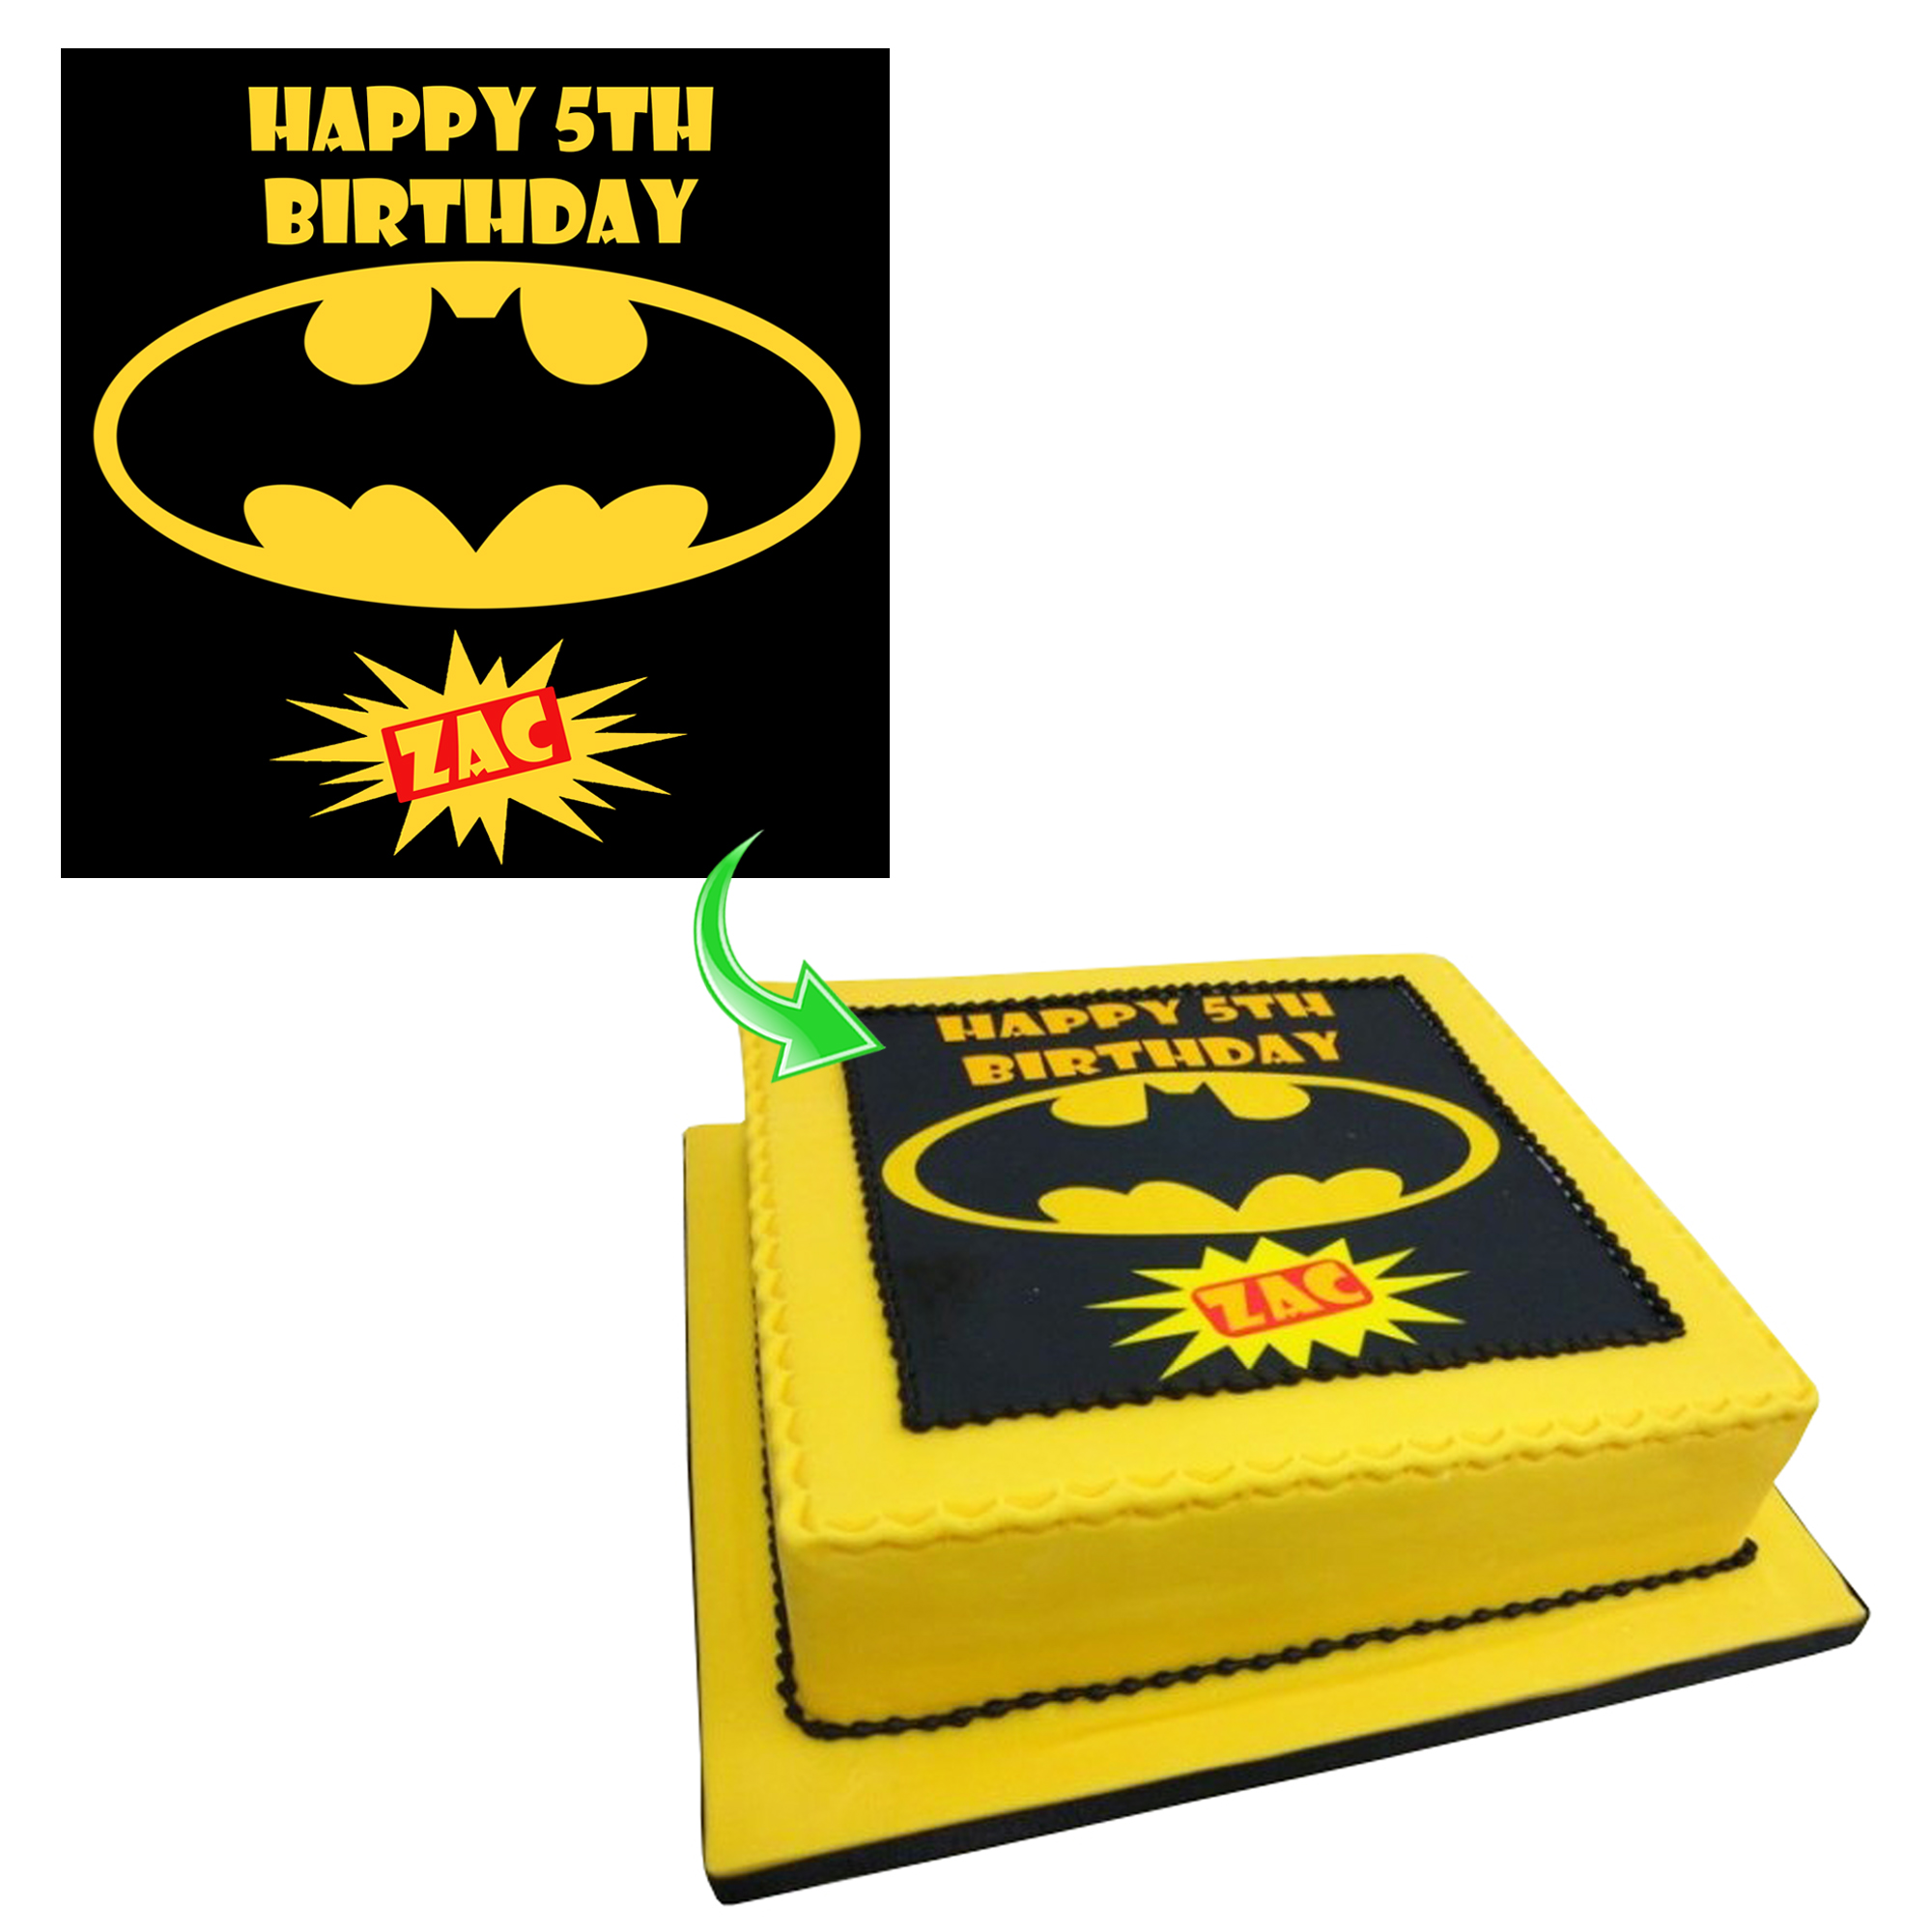 Square batman logo cake